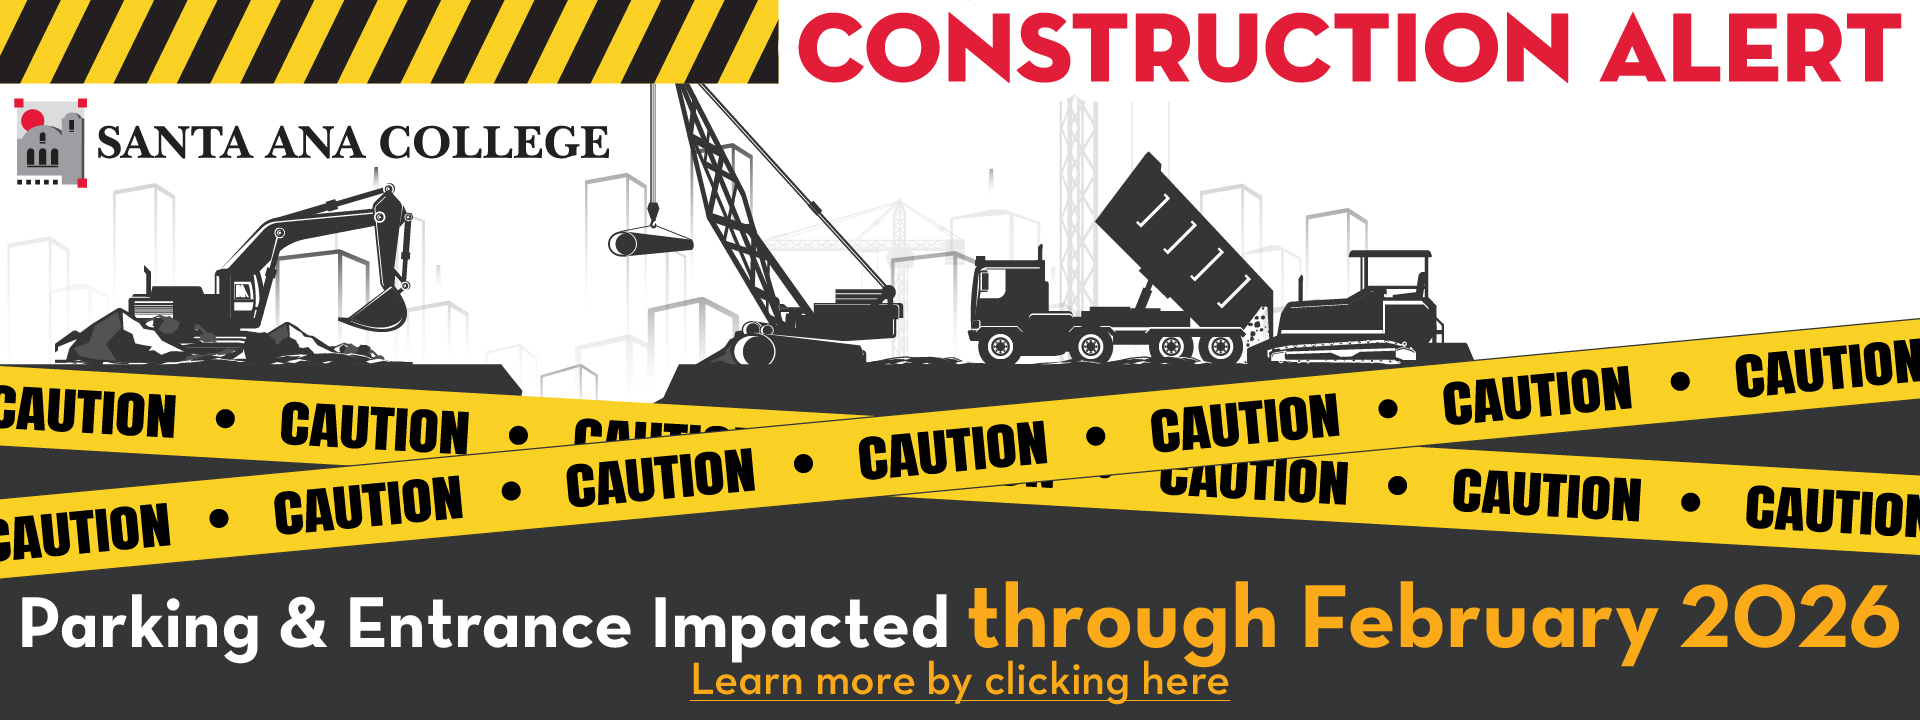 Construction Alert - Russell Hall Demolition